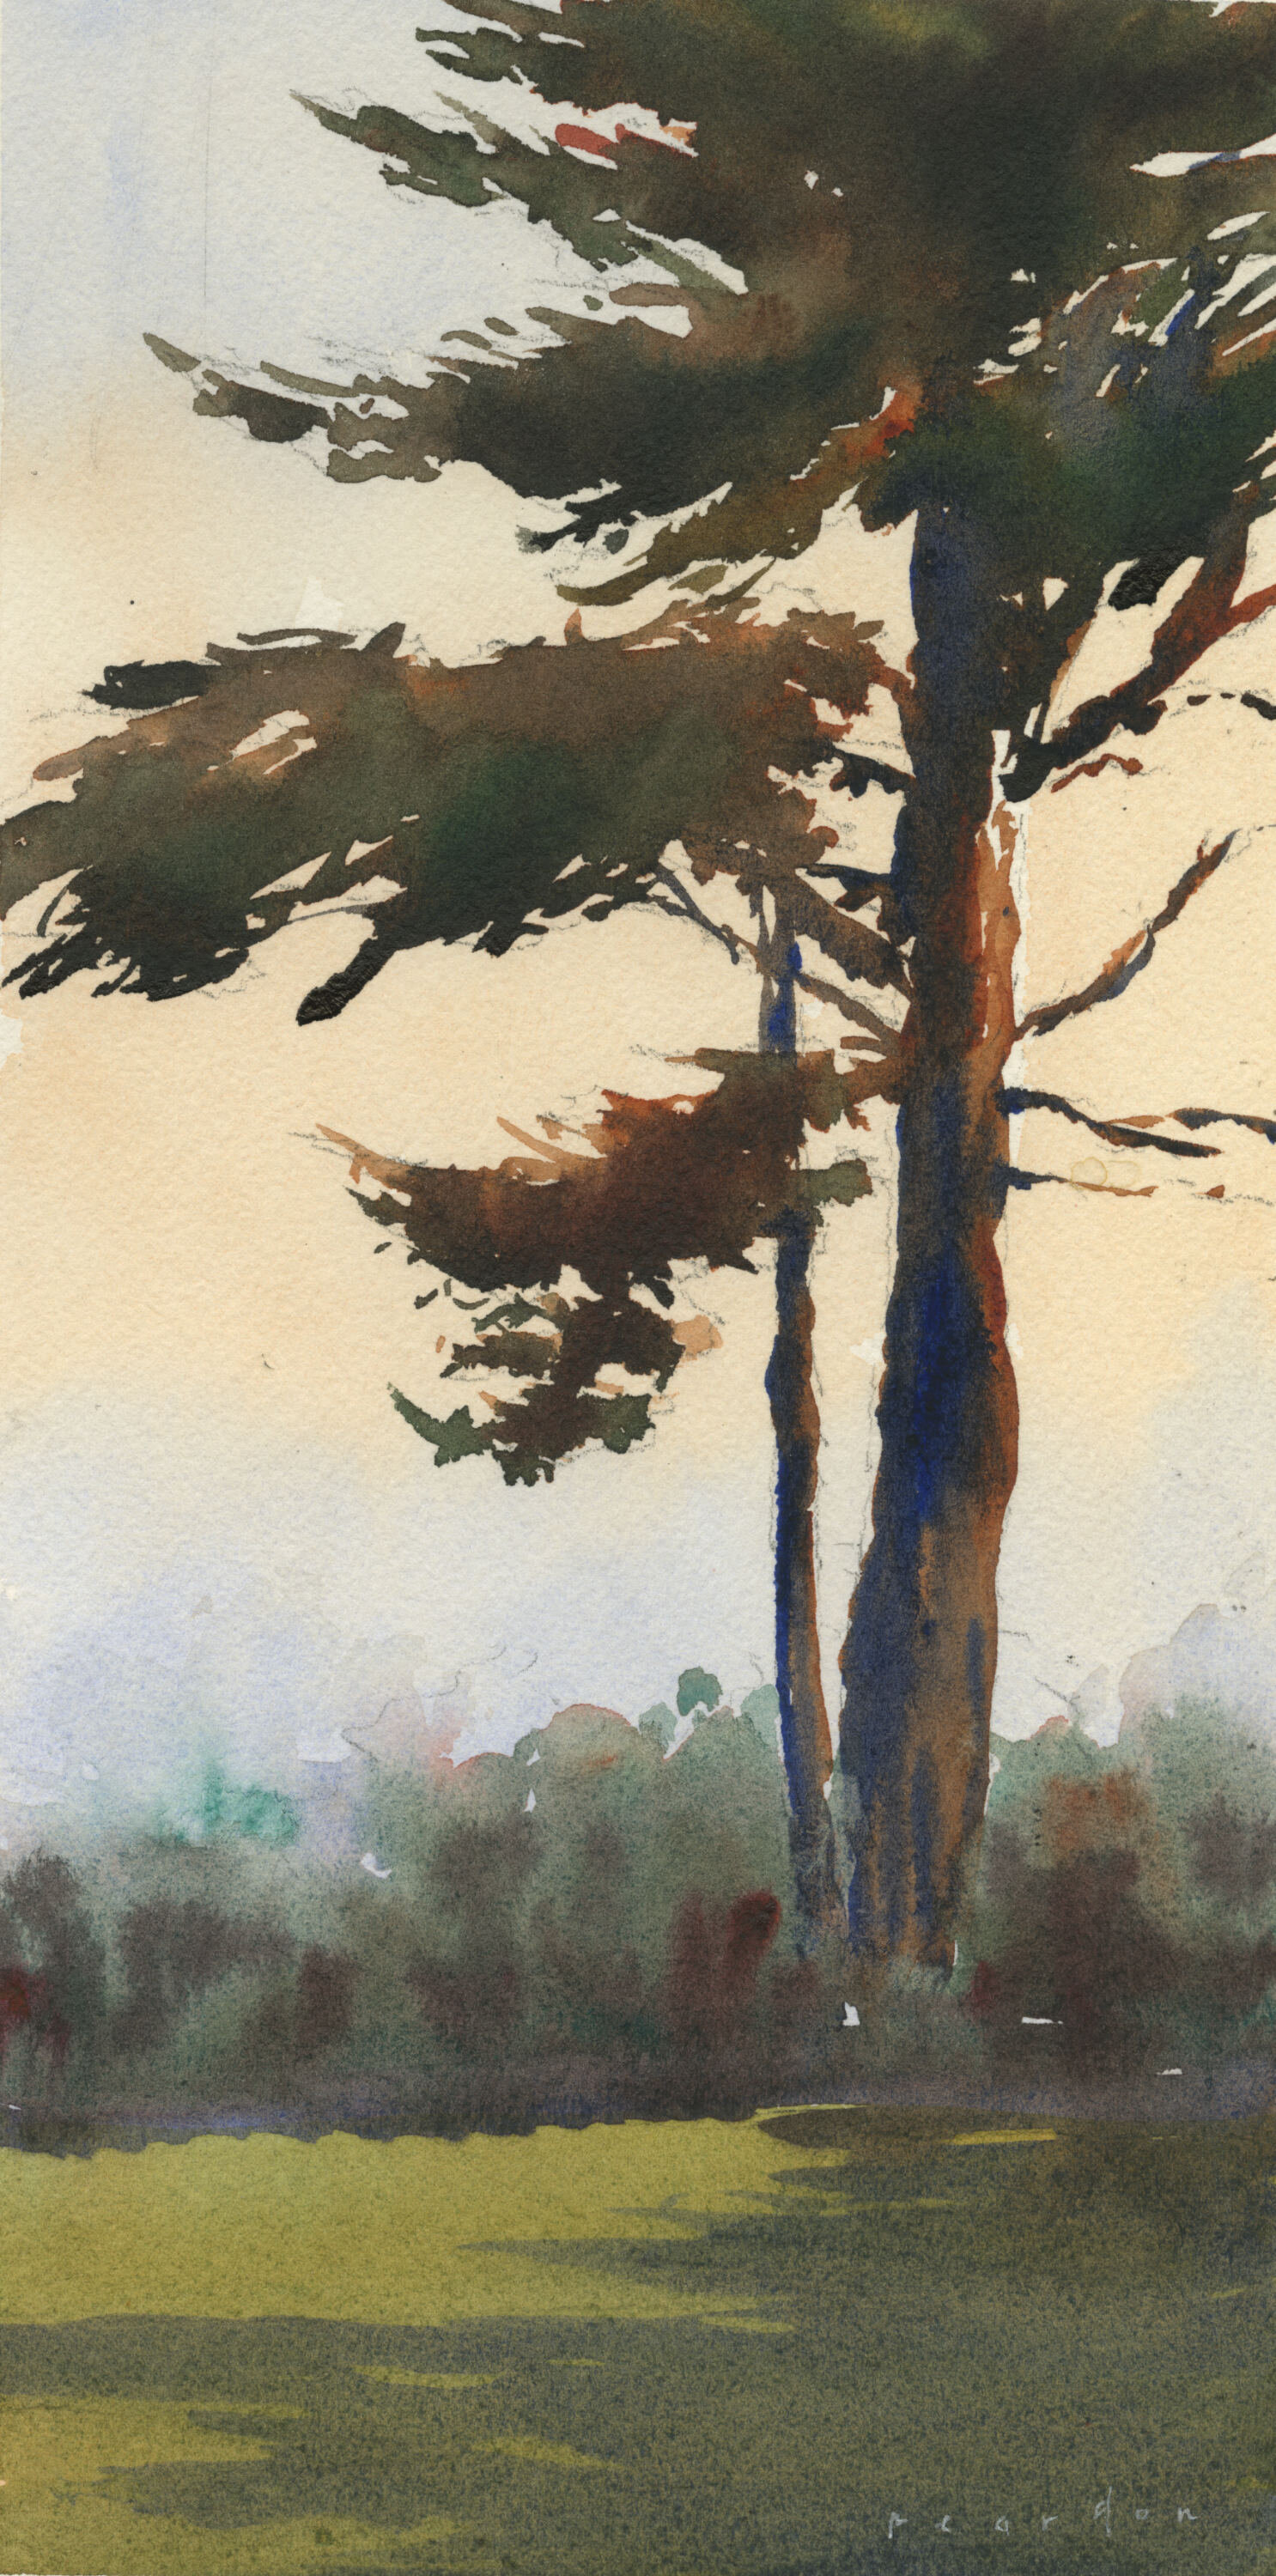 Presidio Cypress